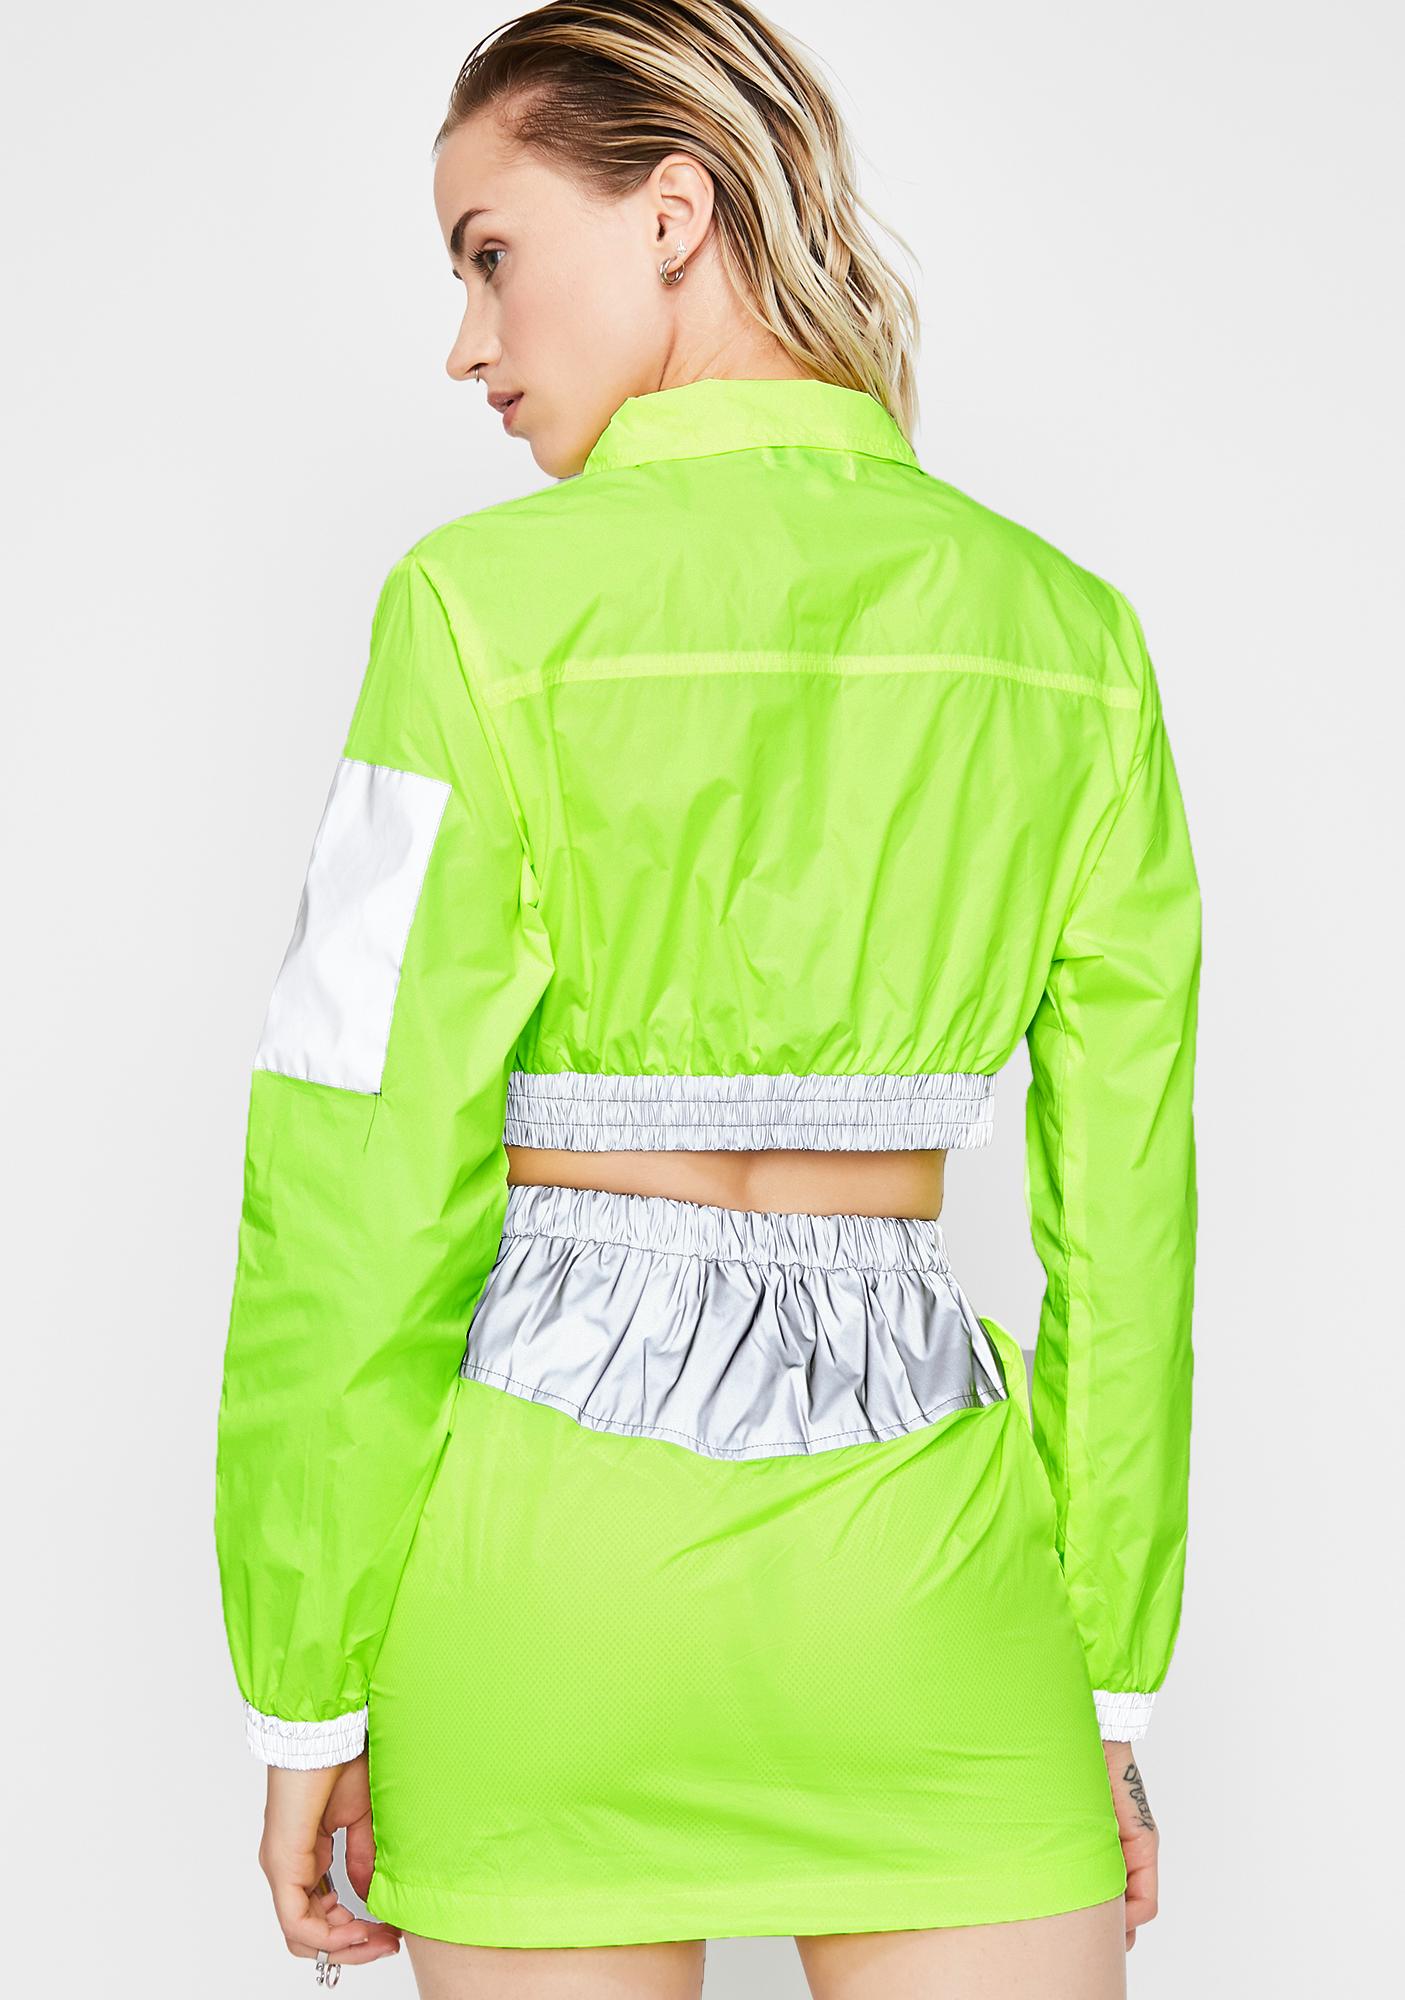 Neon Yellow Reflective Cargo Jacket And Skirt Set | Dolls Kill